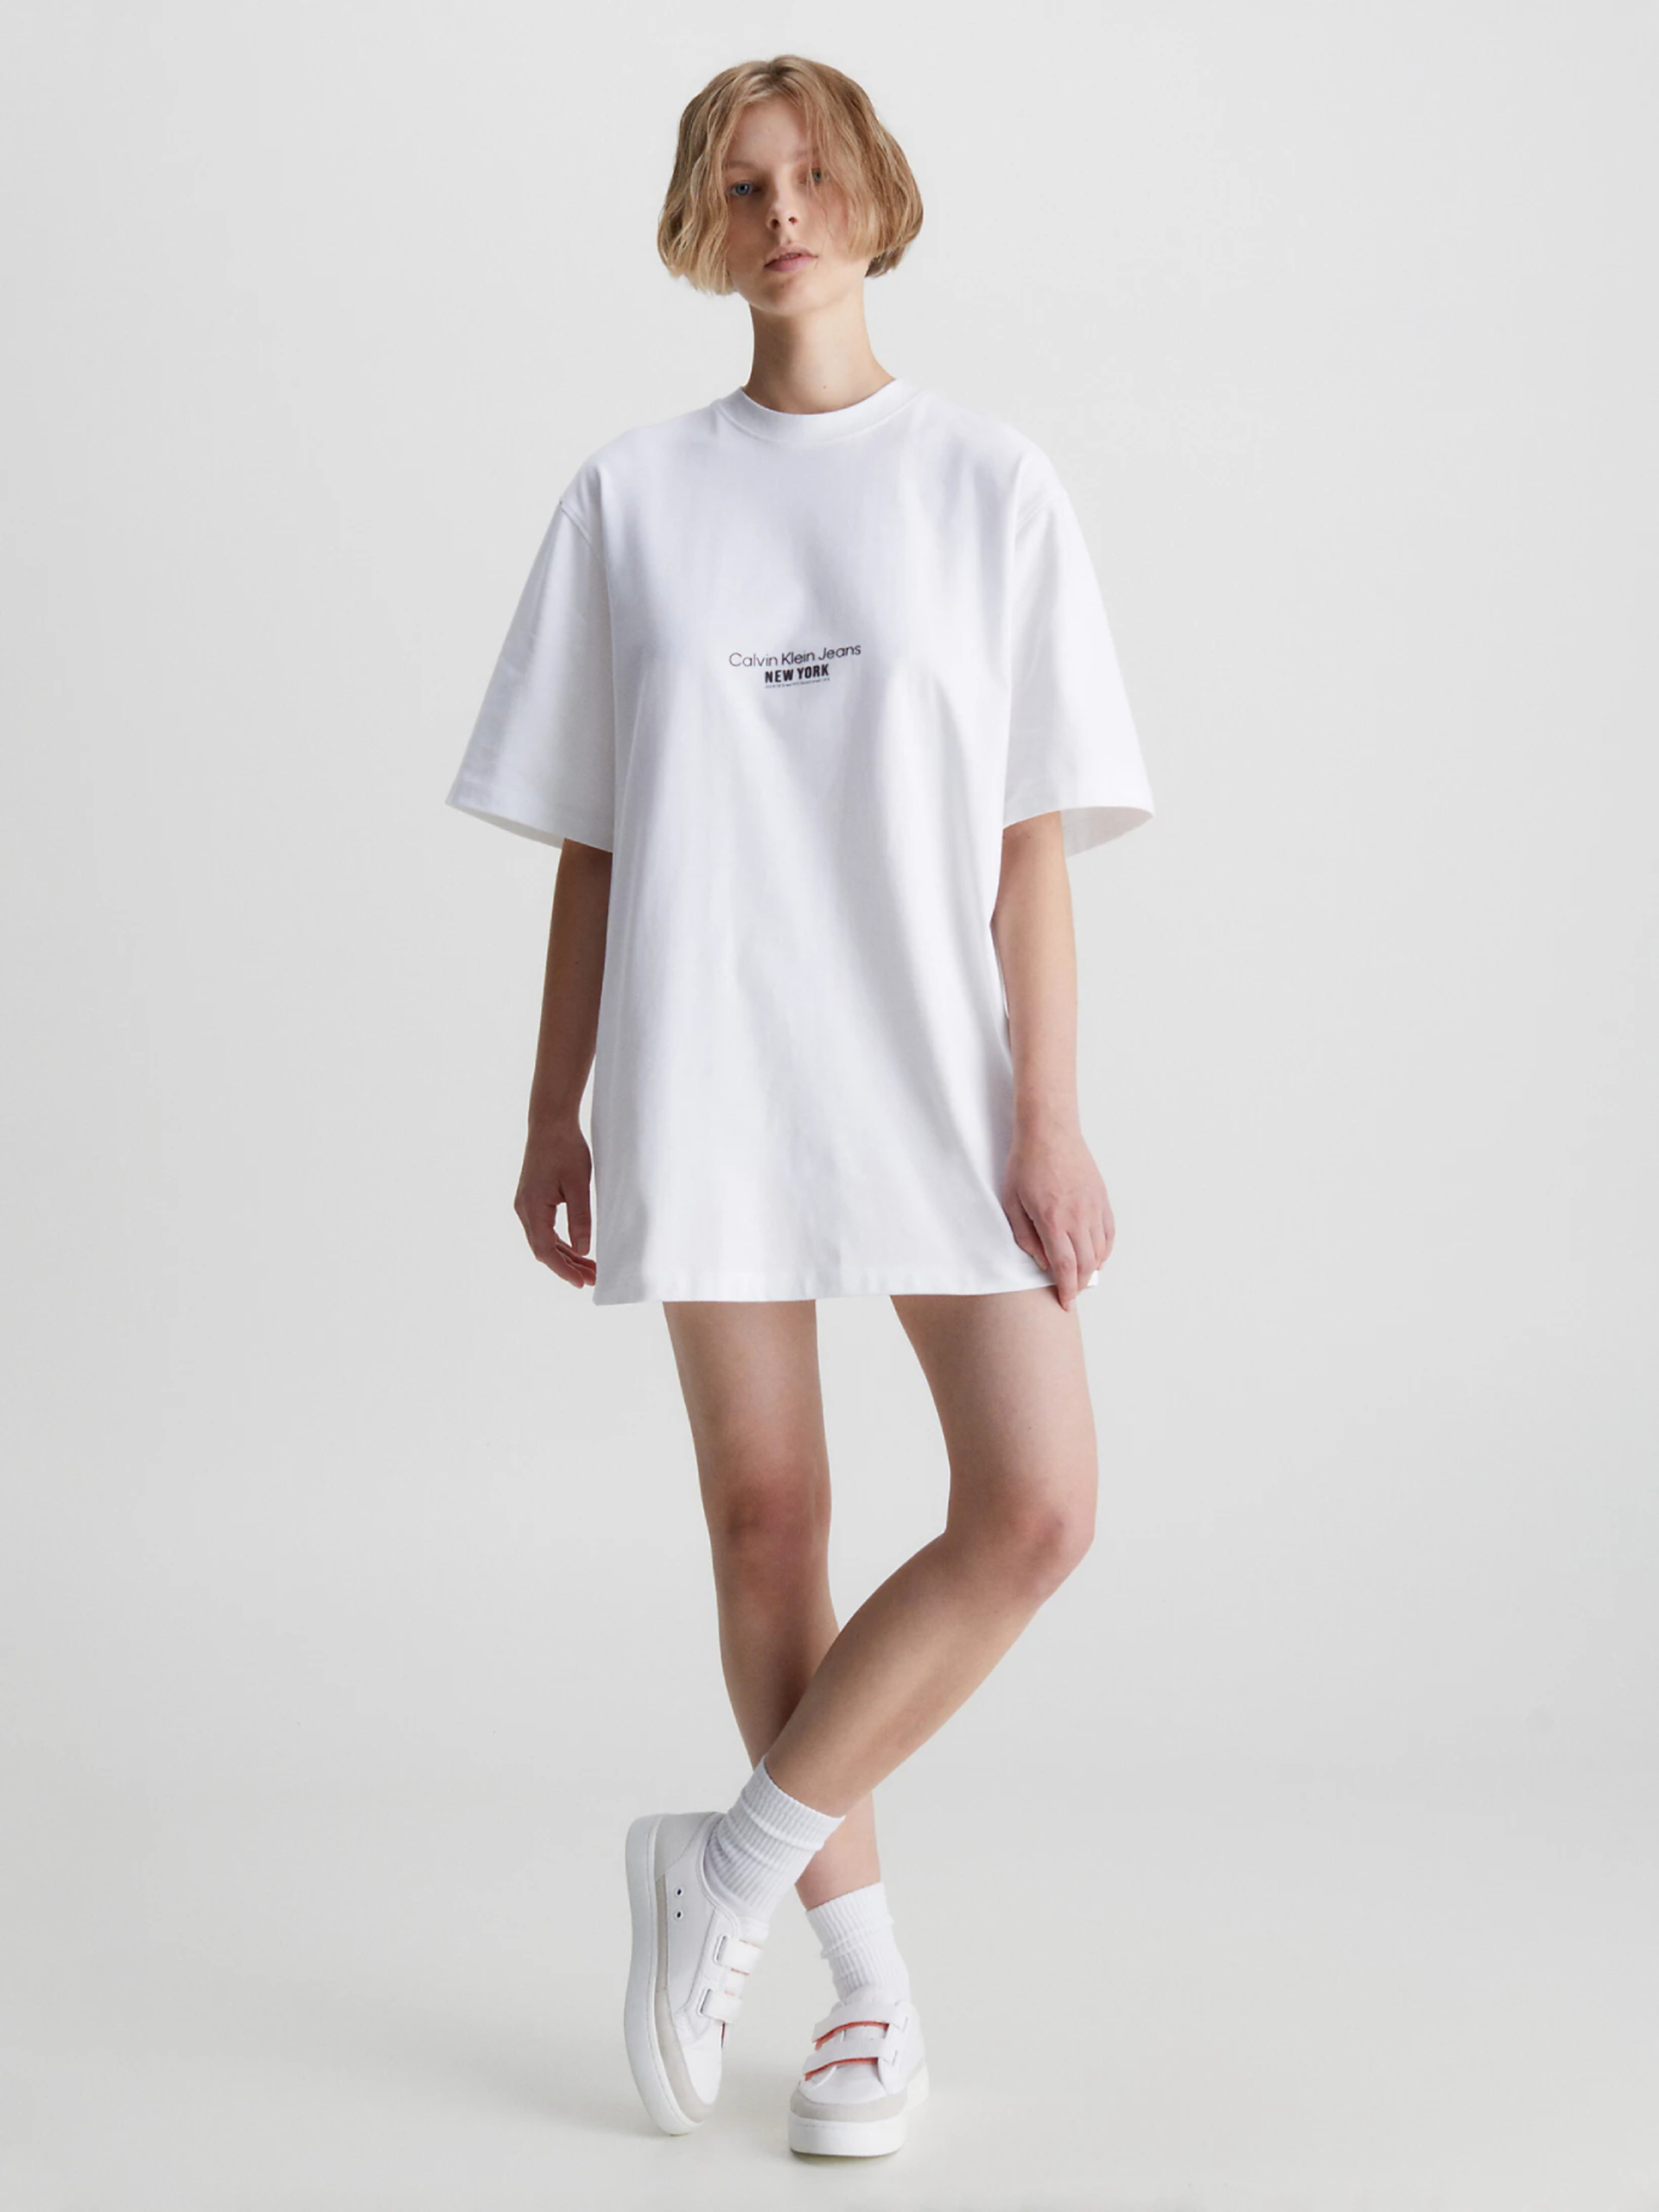 Calvin Klein dámské bílé šaty MOTION FLORAL AW T-SHIRT DRESS - L (YAF)